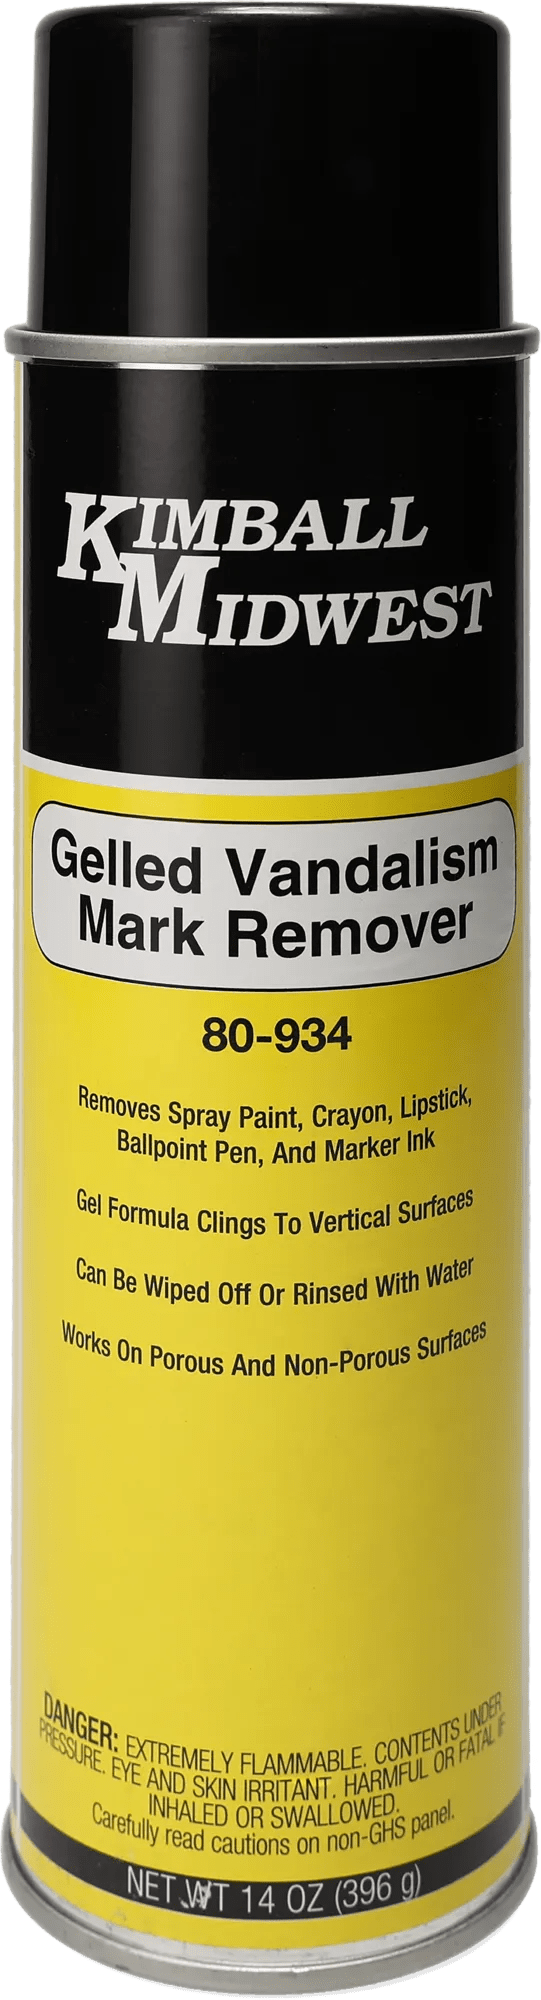 Gelled Vandalism Mark Remover - Bulk - 12 Pack